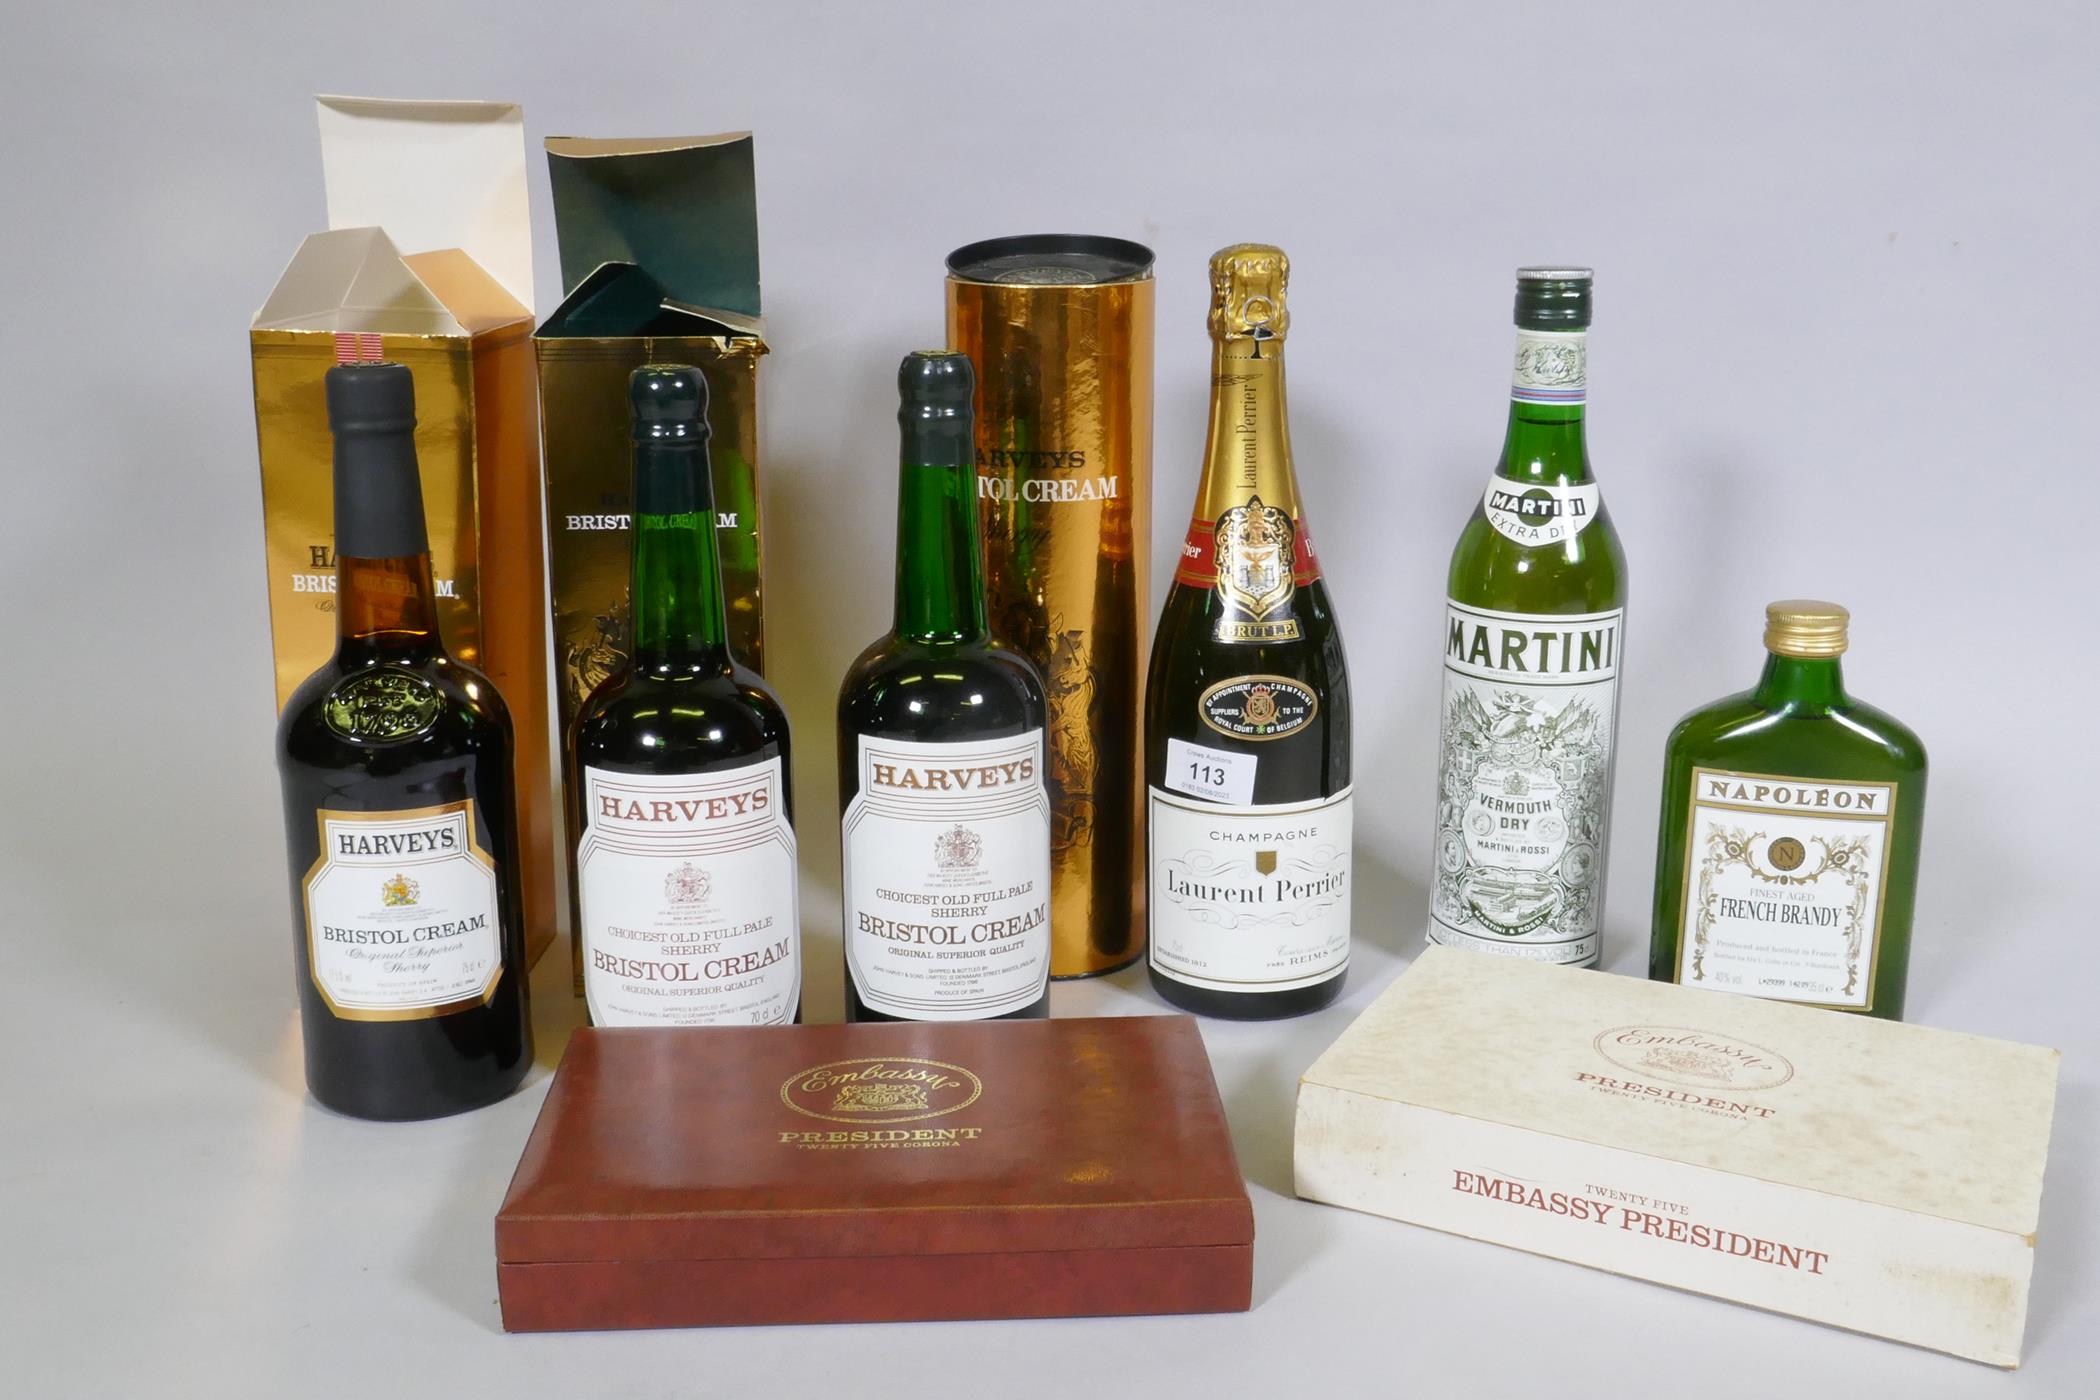 A box of 25 Embassy President Corona cigars, 3 bottles of Harveys Bristol Cream sherry, Vermouth,